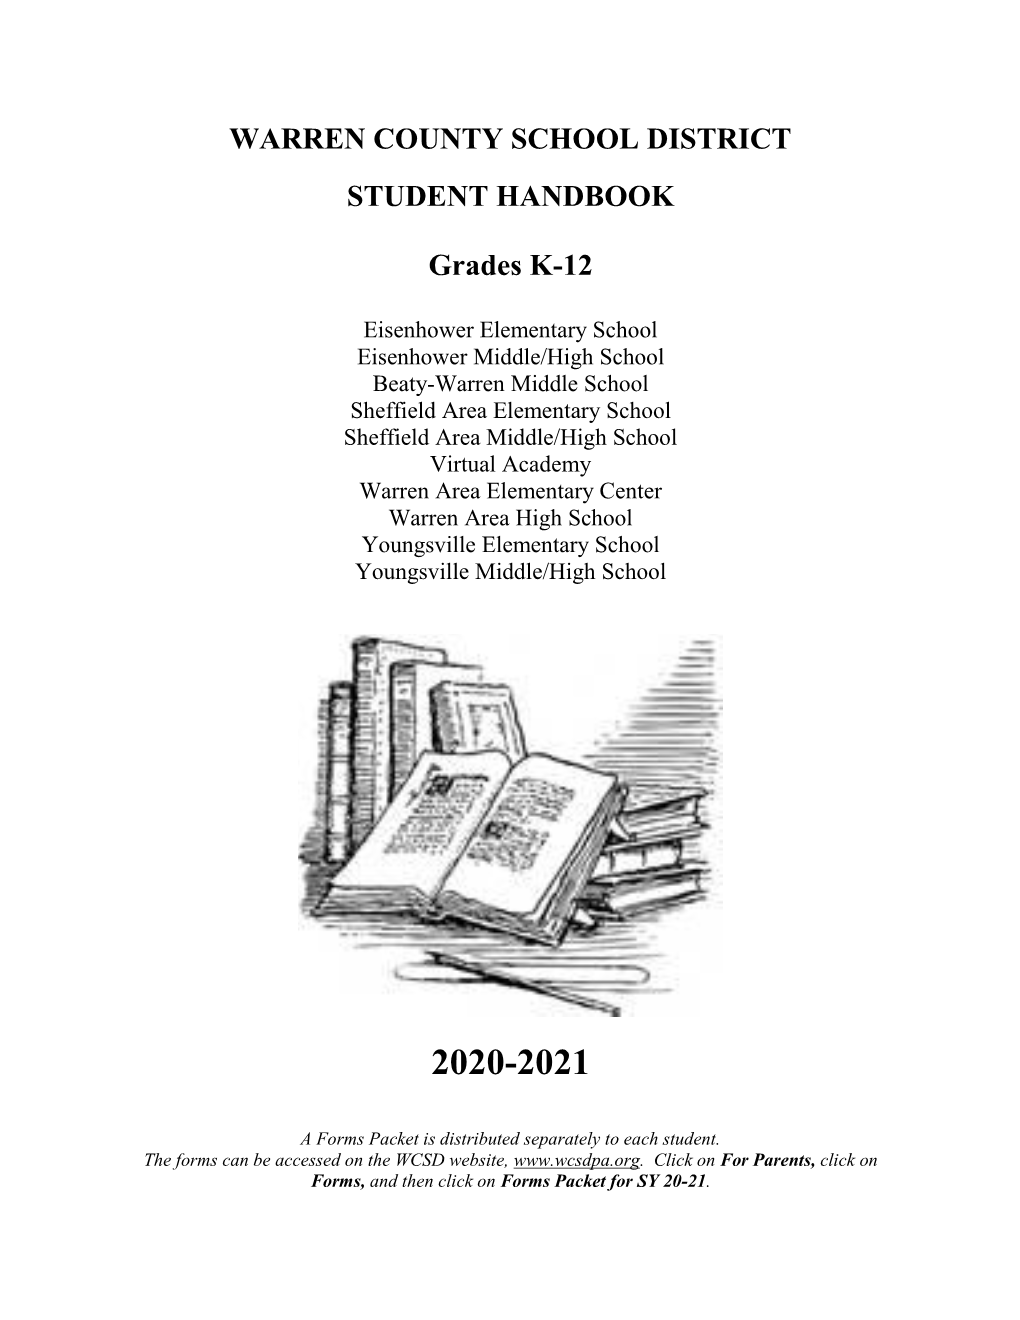 20-21 Student Handbook Final.Pdf